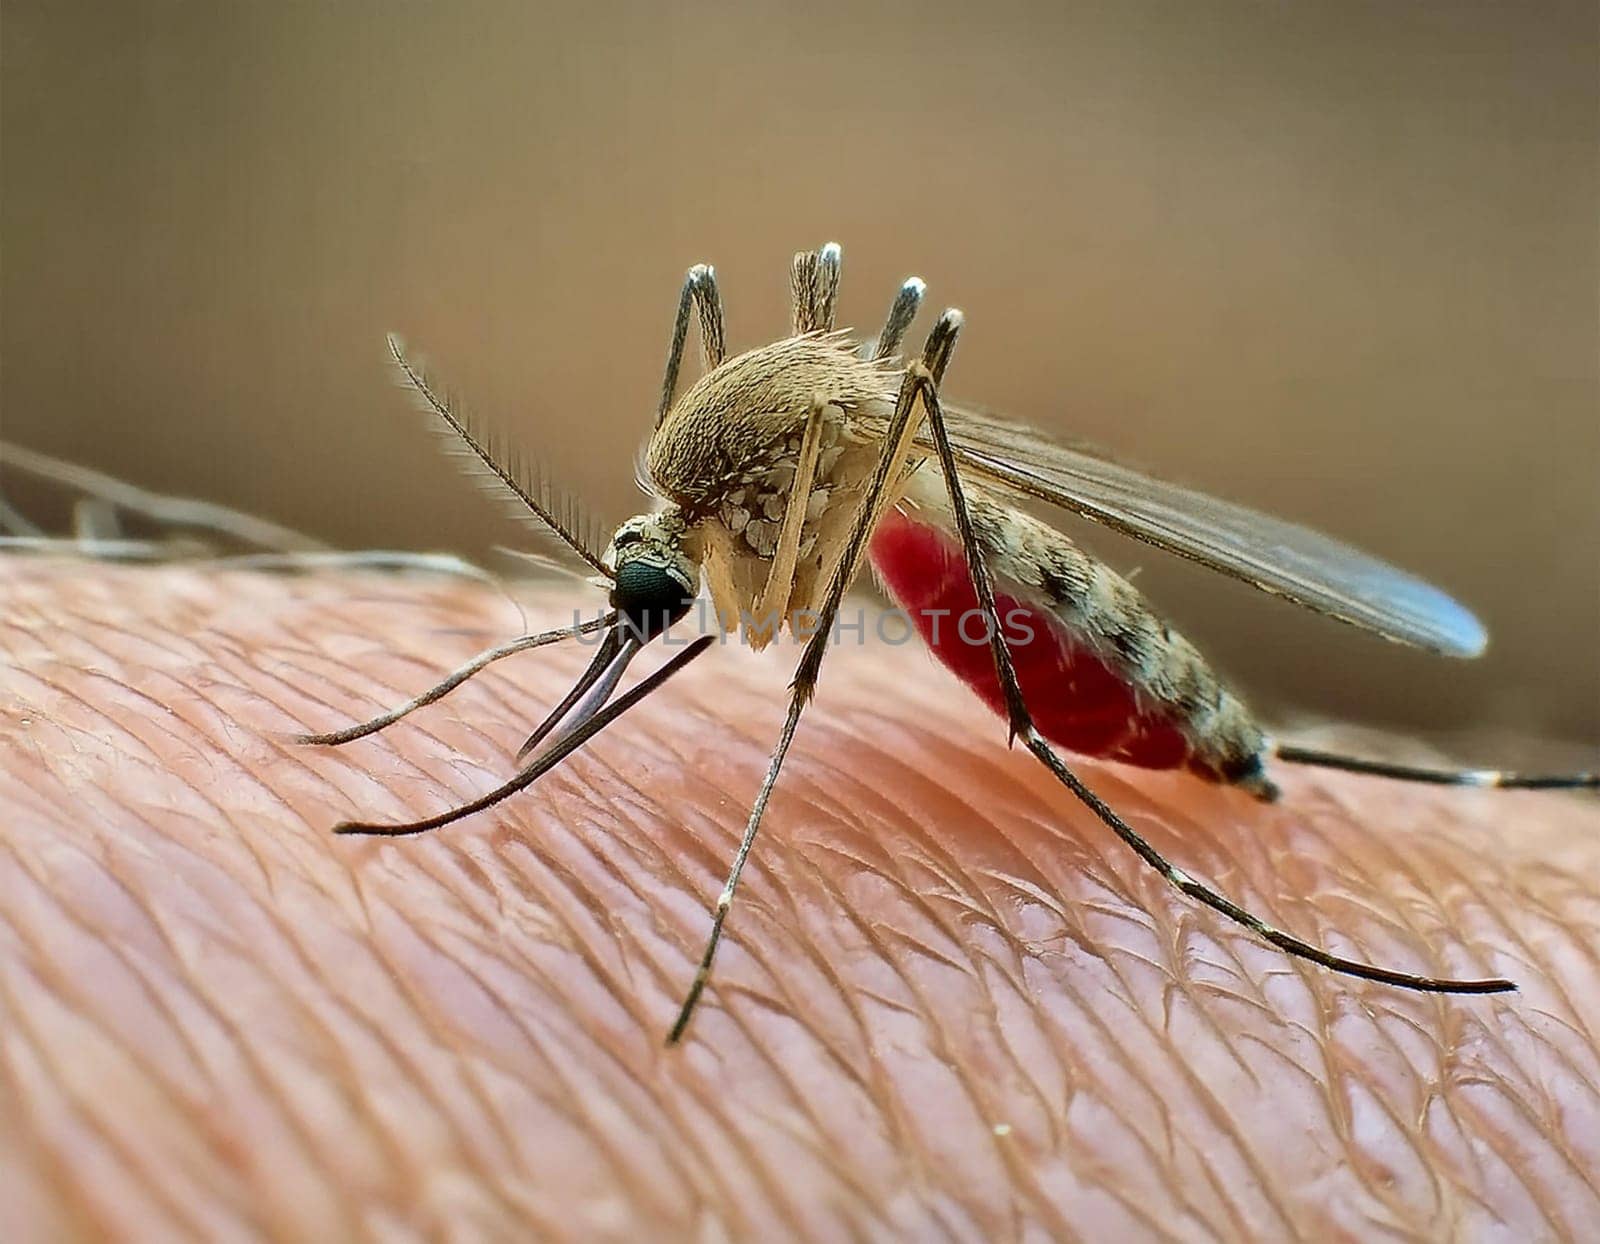 Dangerous malaria infected mosquito skin bite. Leishmaniasis, encephalitis, yellow fever, dengue fever, malaria disease, Mayaro or Zika virus, Culex infectious mosquito parasite, insect macro.